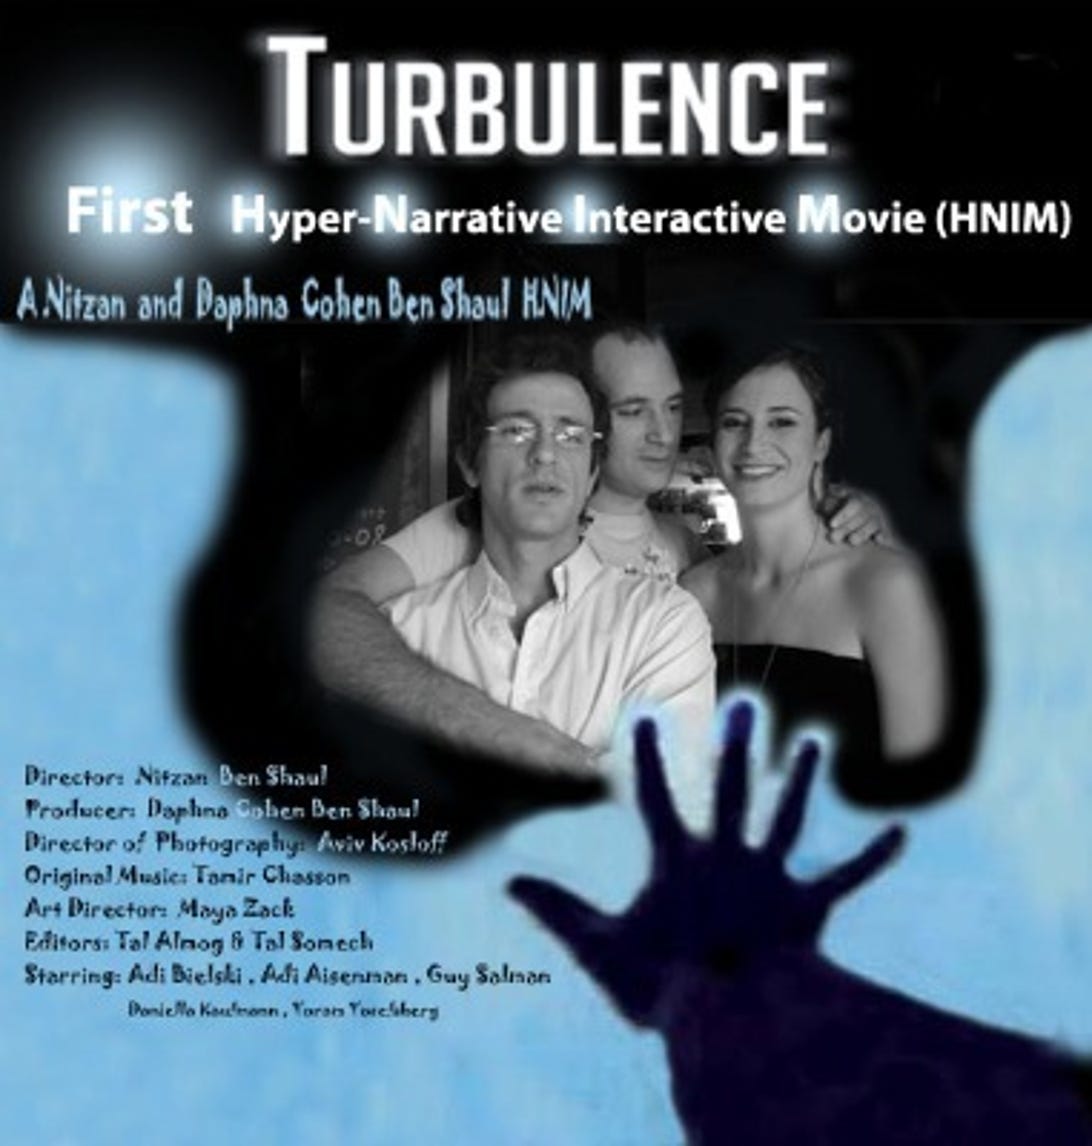 Turbulence poster